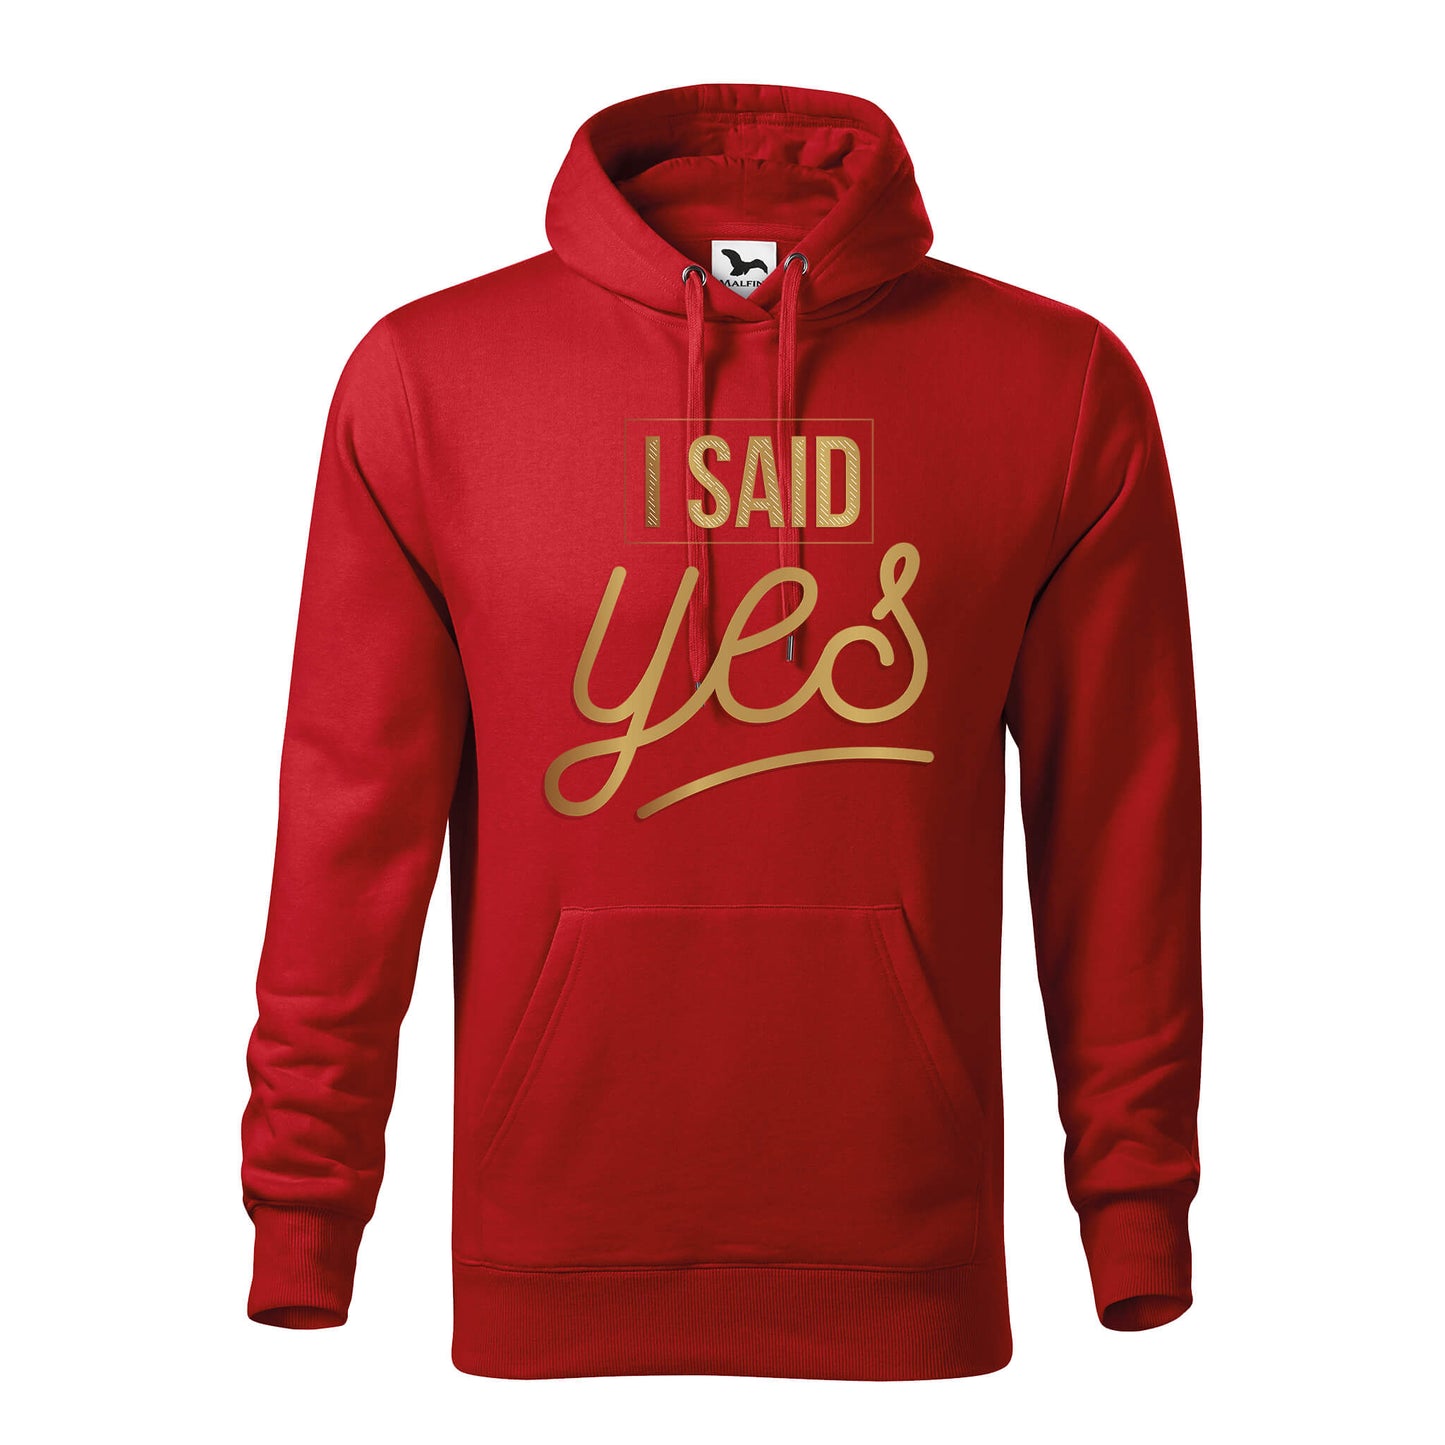 I said yes hoodie - rvdesignprint